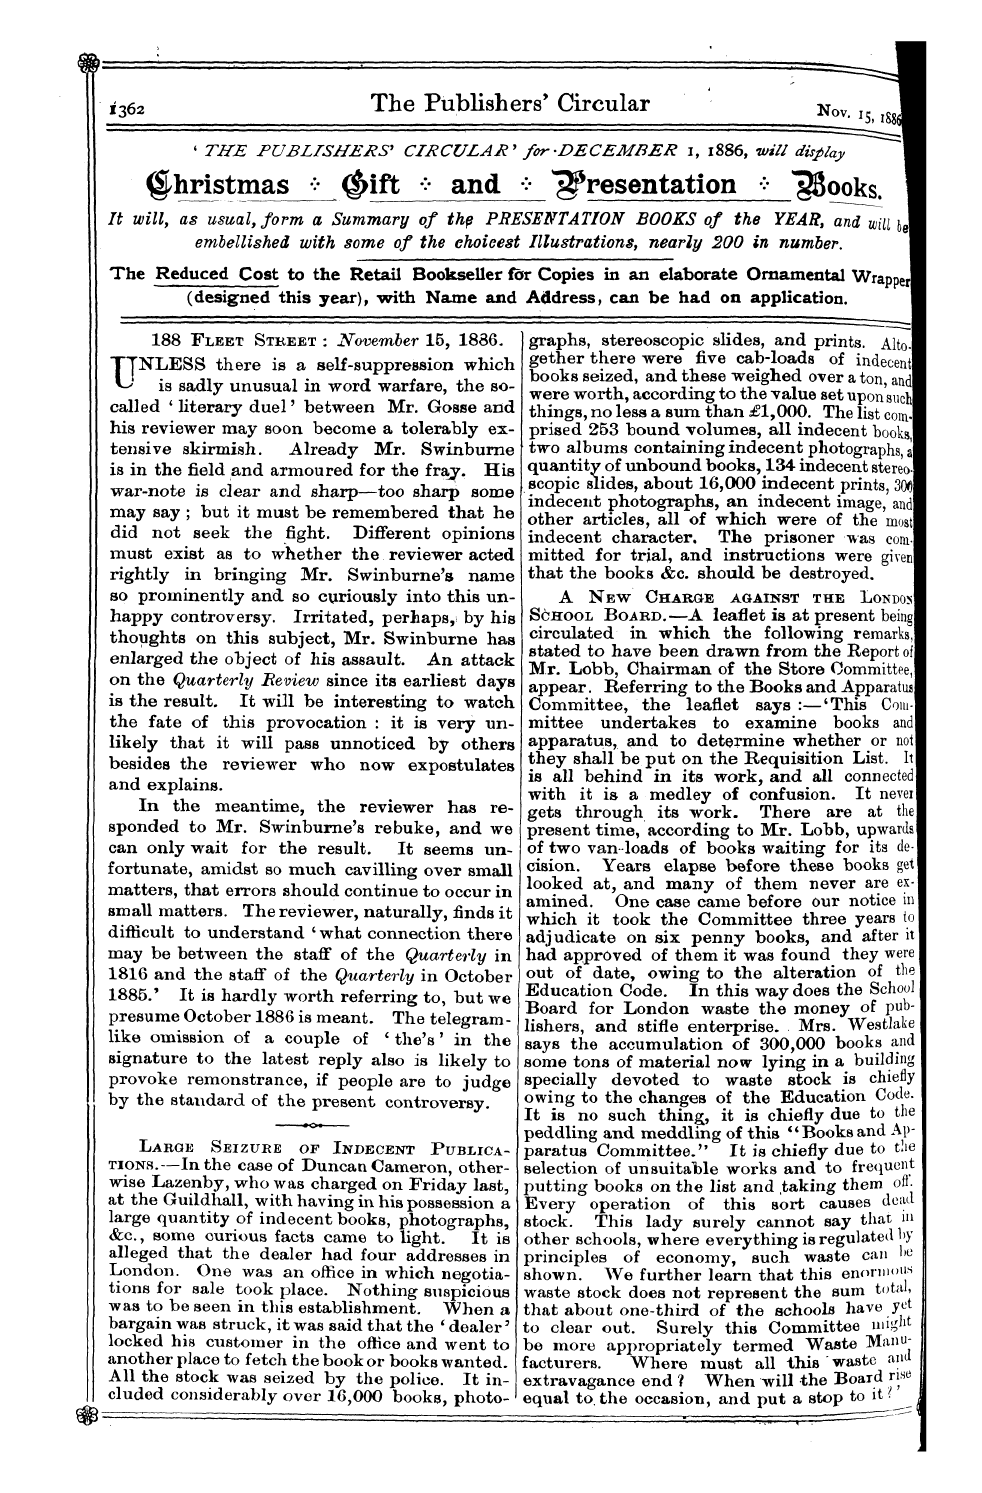 Publishers’ Circular (1880-1890): jS F Y, 1st edition - Large Seizure Of Indecent Publicaat Tion...